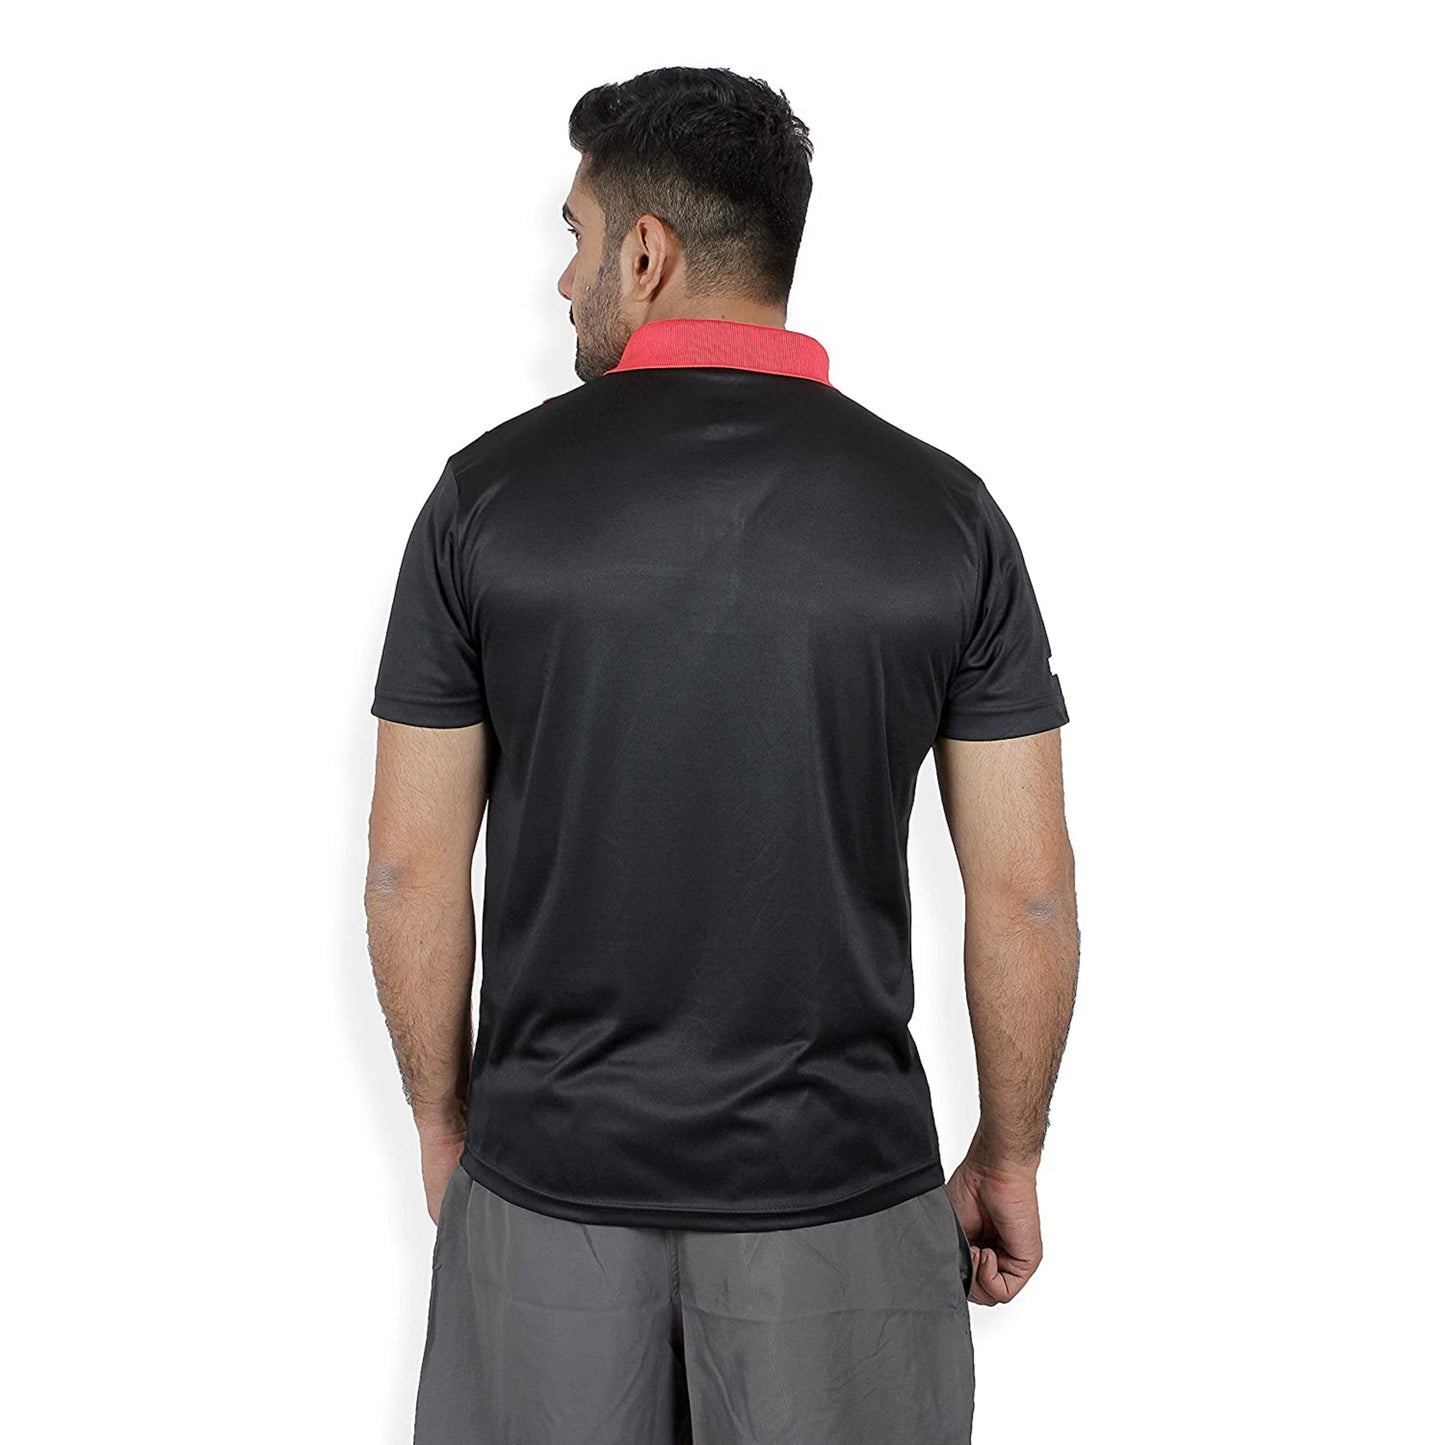 Stag Men's Solid Regular Fit T-Shirt (Viper: Black/Red)